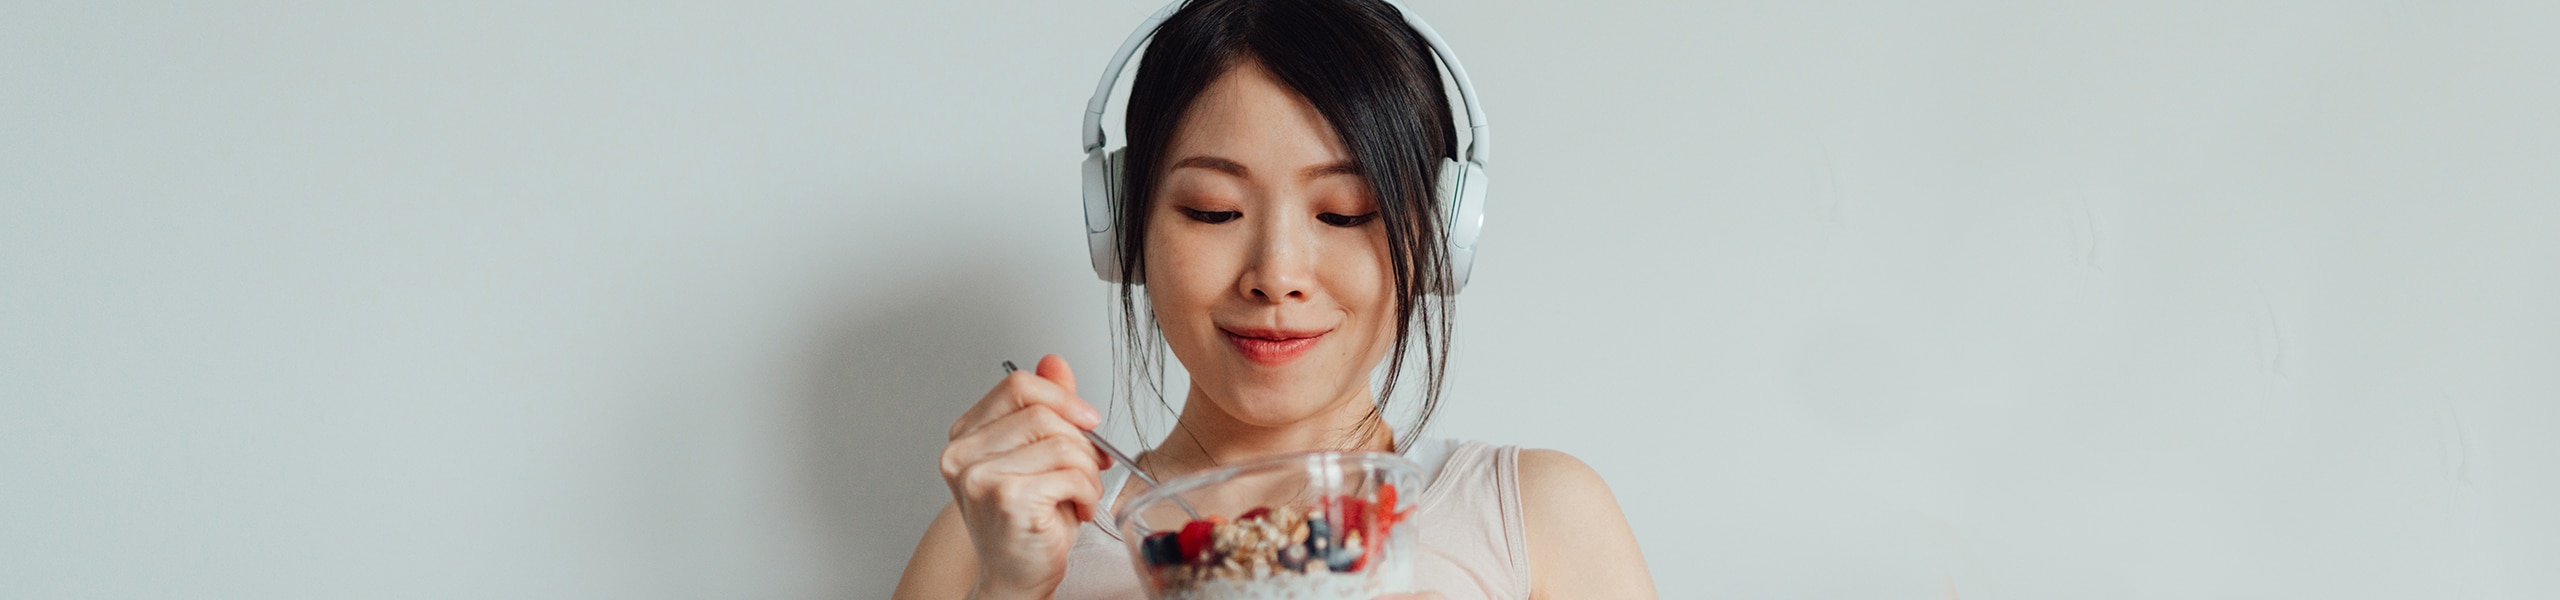 Person wearing headphones enjoys a bowl of yogurt and berries